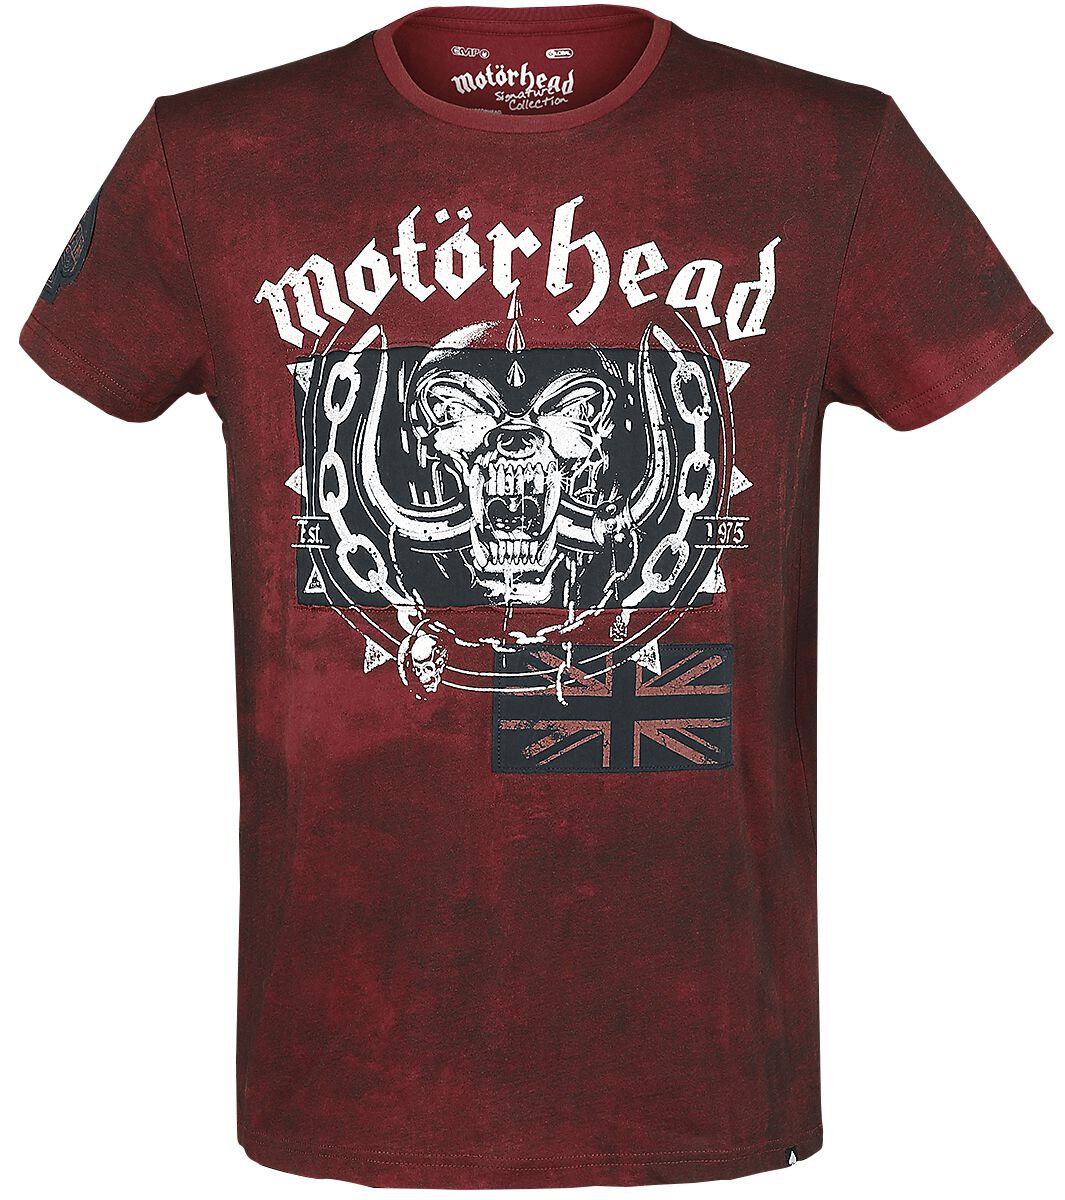 Motörhead T-Shirt - EMP Signature Collection - S bis 5XL - für Männer - Größe 5XL - dunkelrot  - EMP exklusives Merchandise!